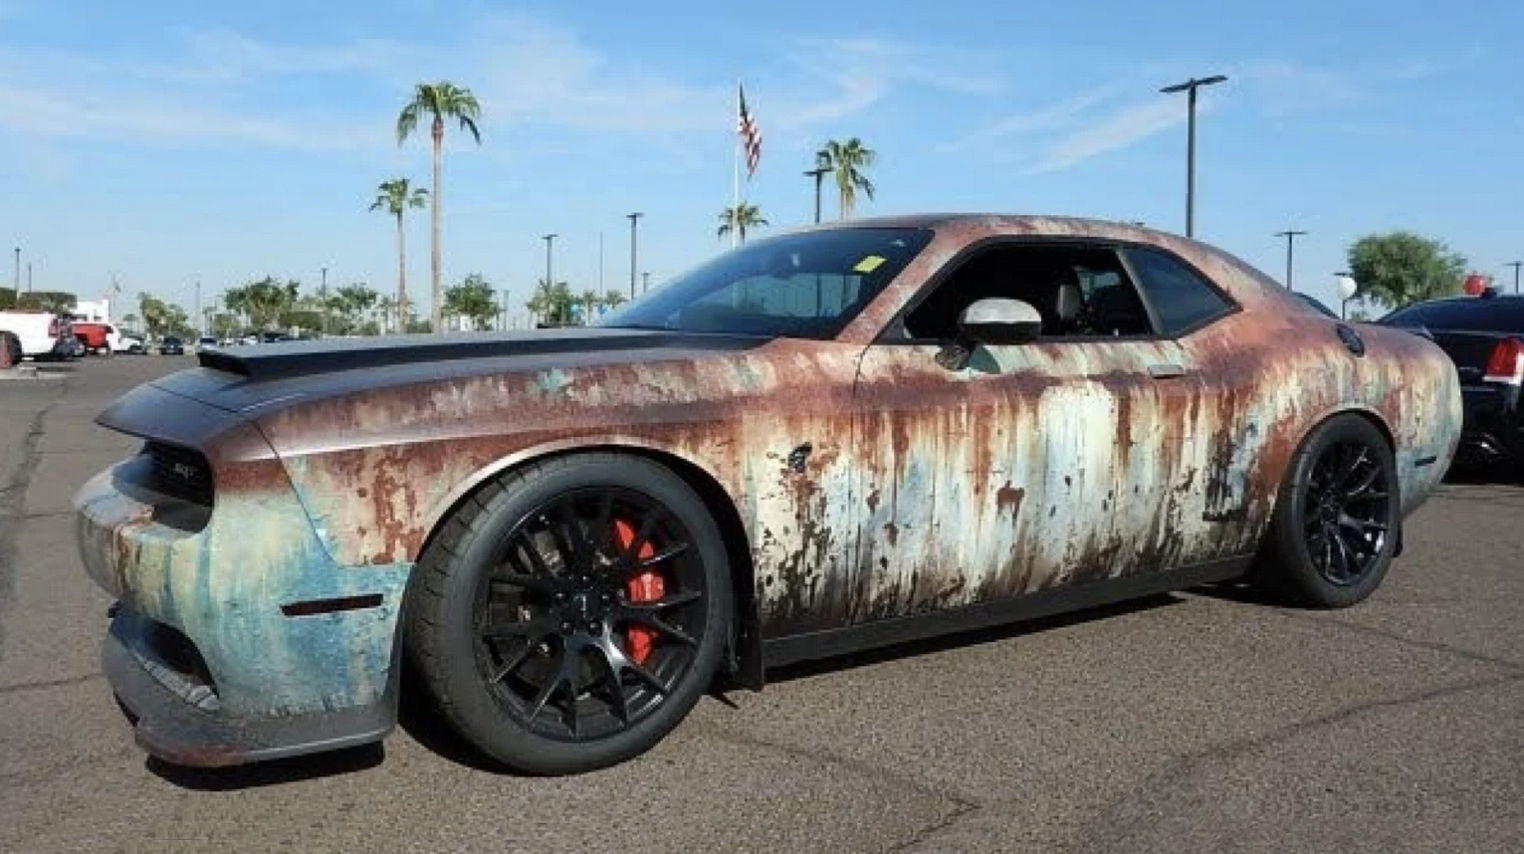 Rust on the car фото 116